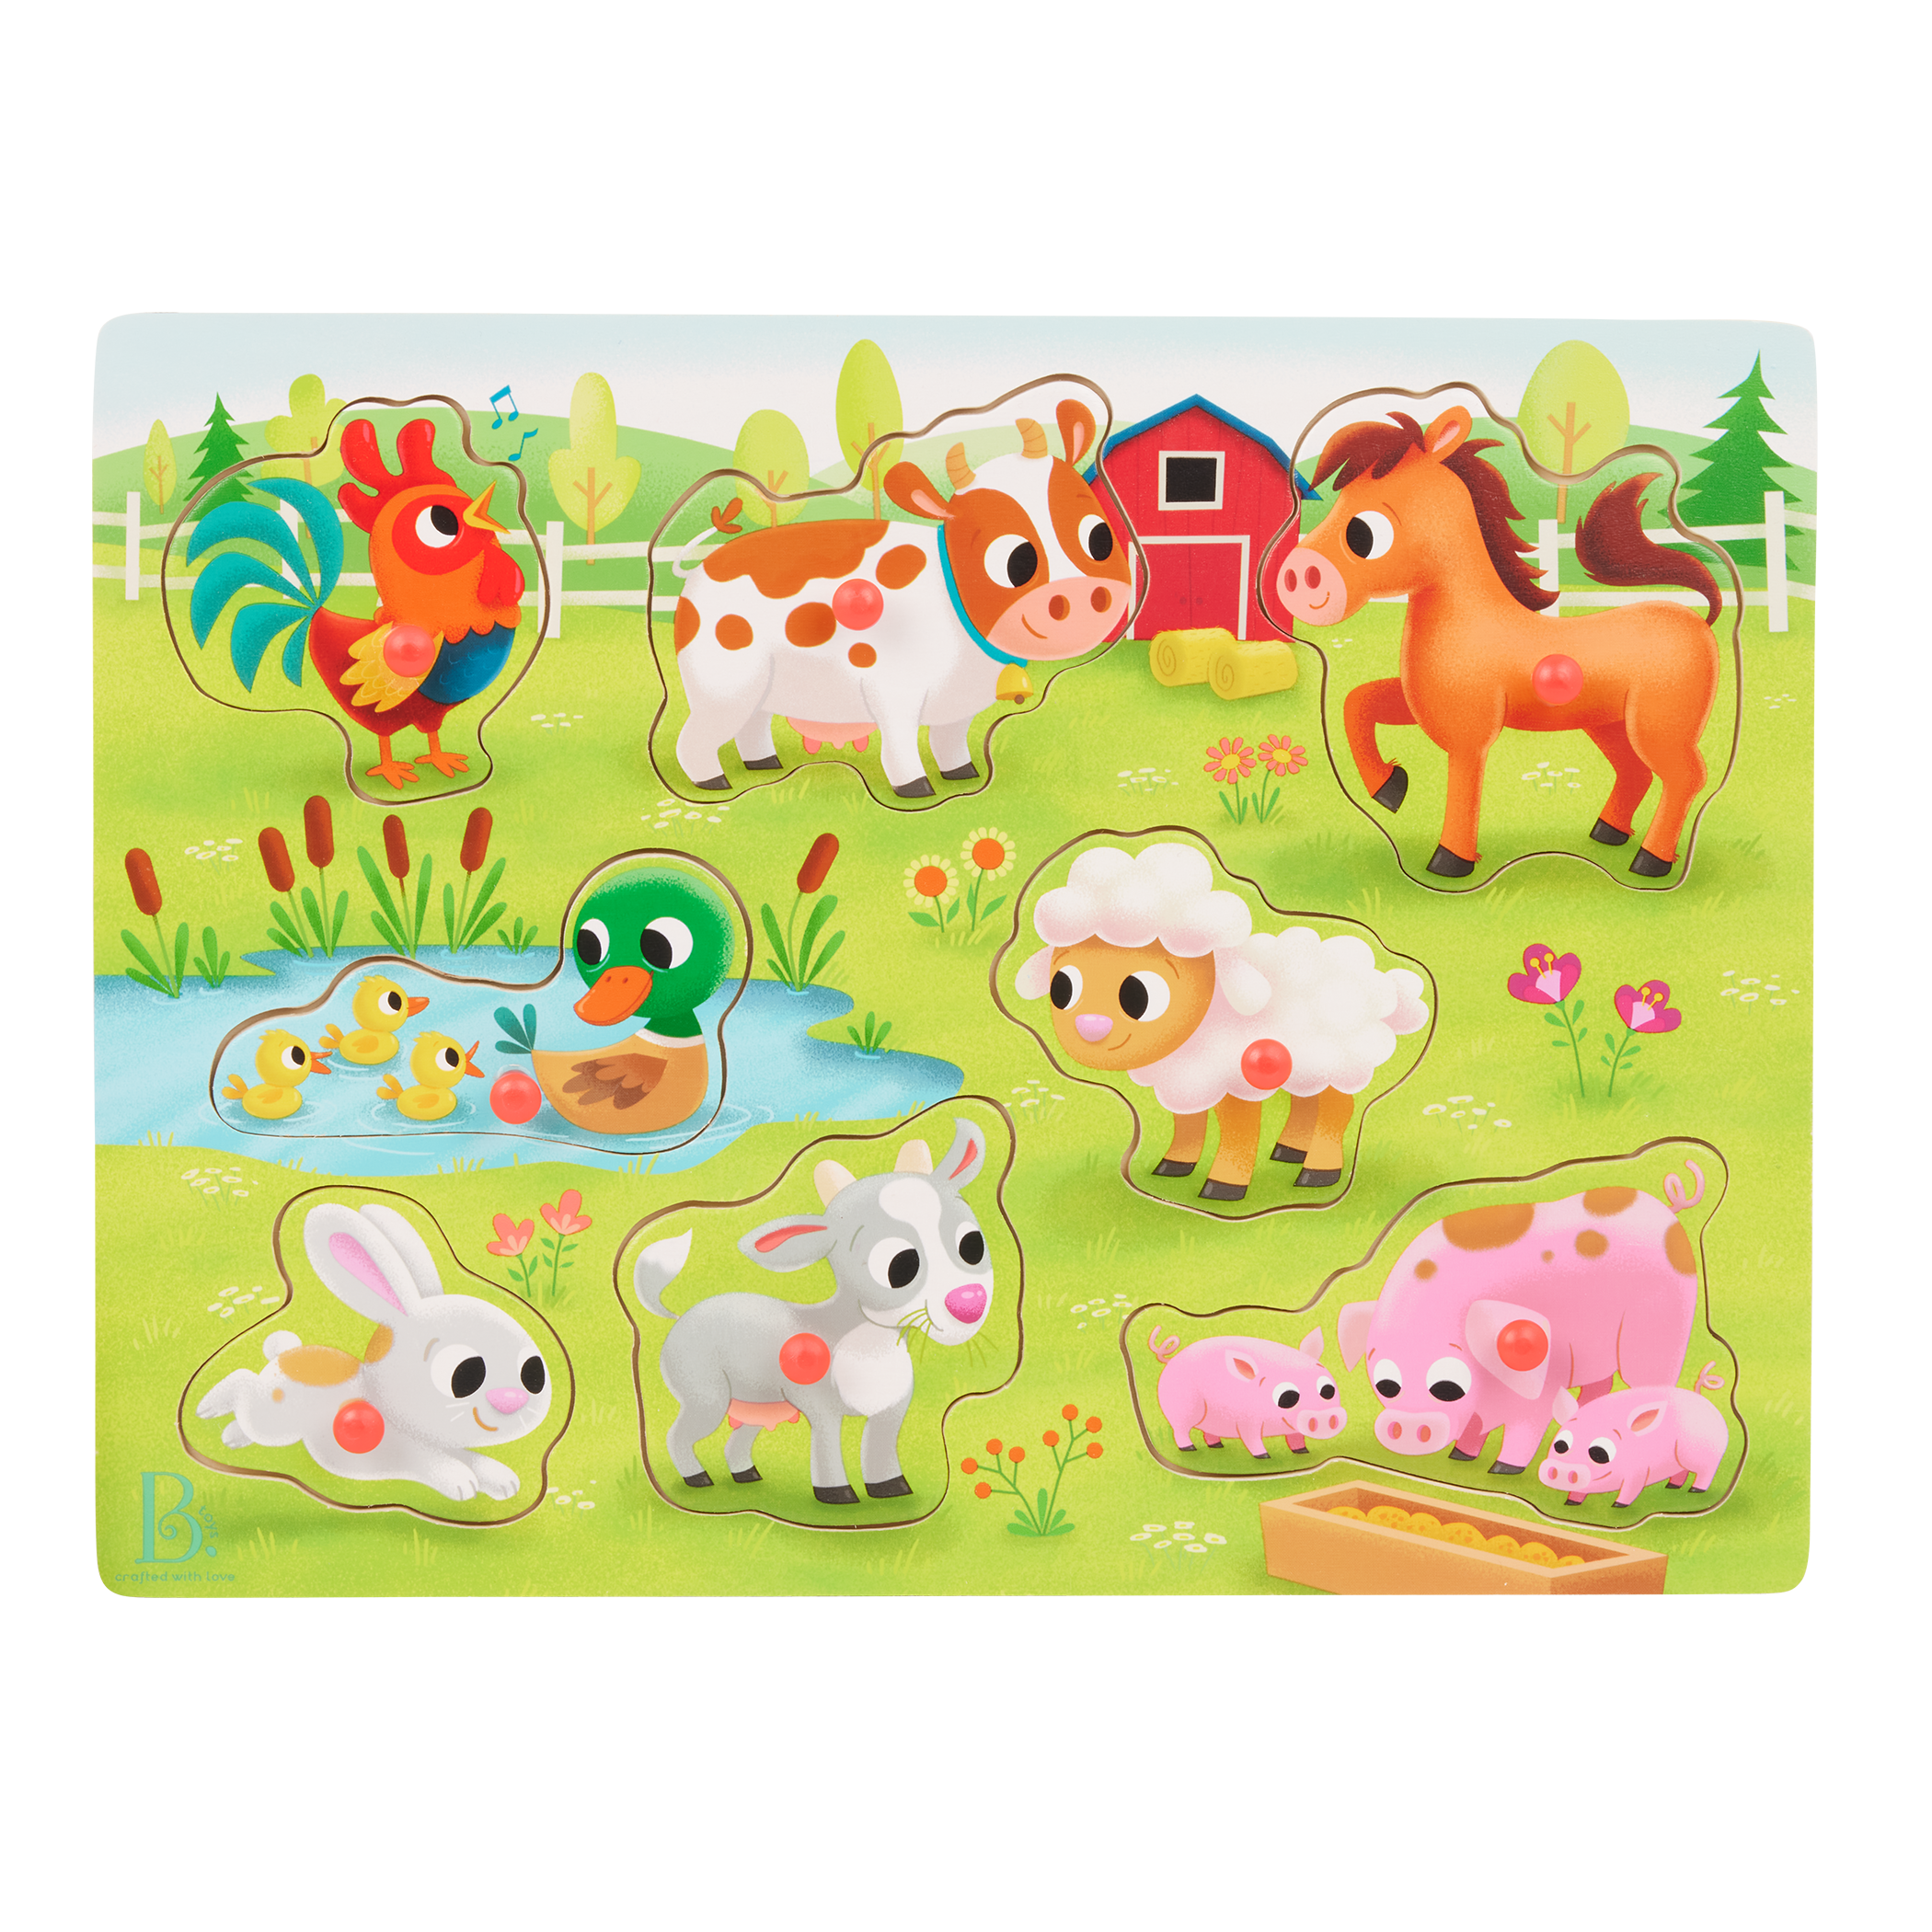 Peg puzzle with farm animals.